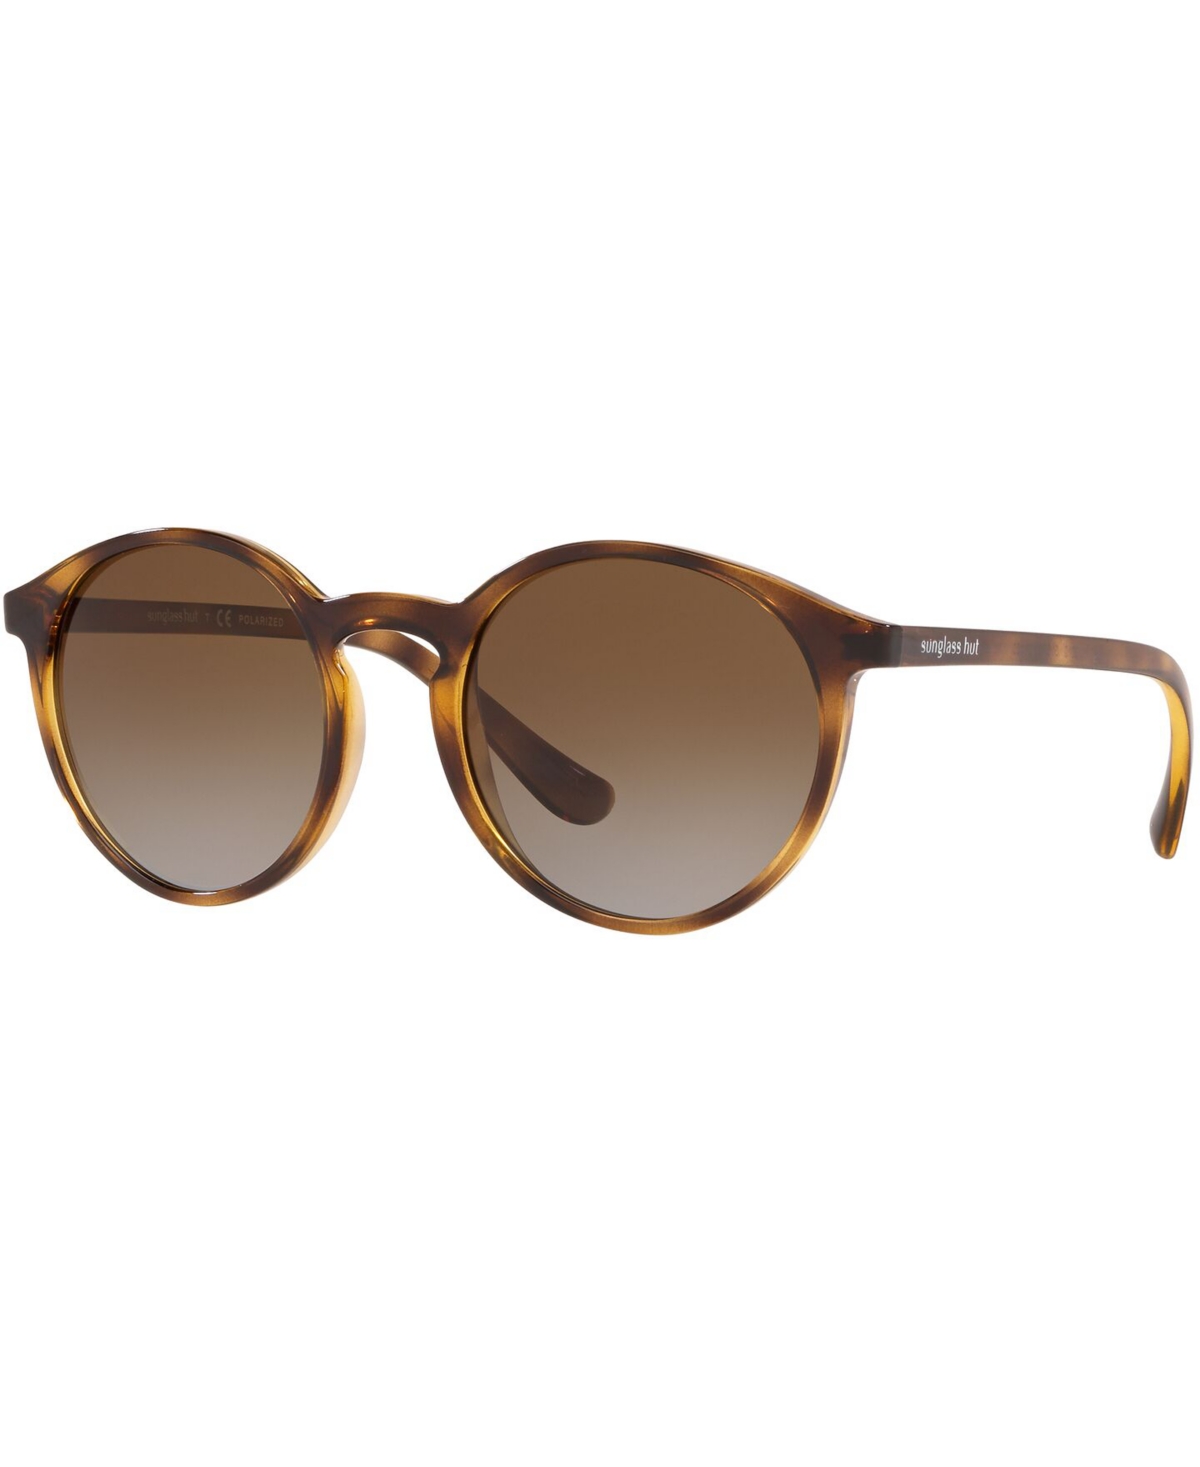 Polarized Sunglasses, 0HU2019 - SHINY HAVANA/POLAR GRADIENT BROWN